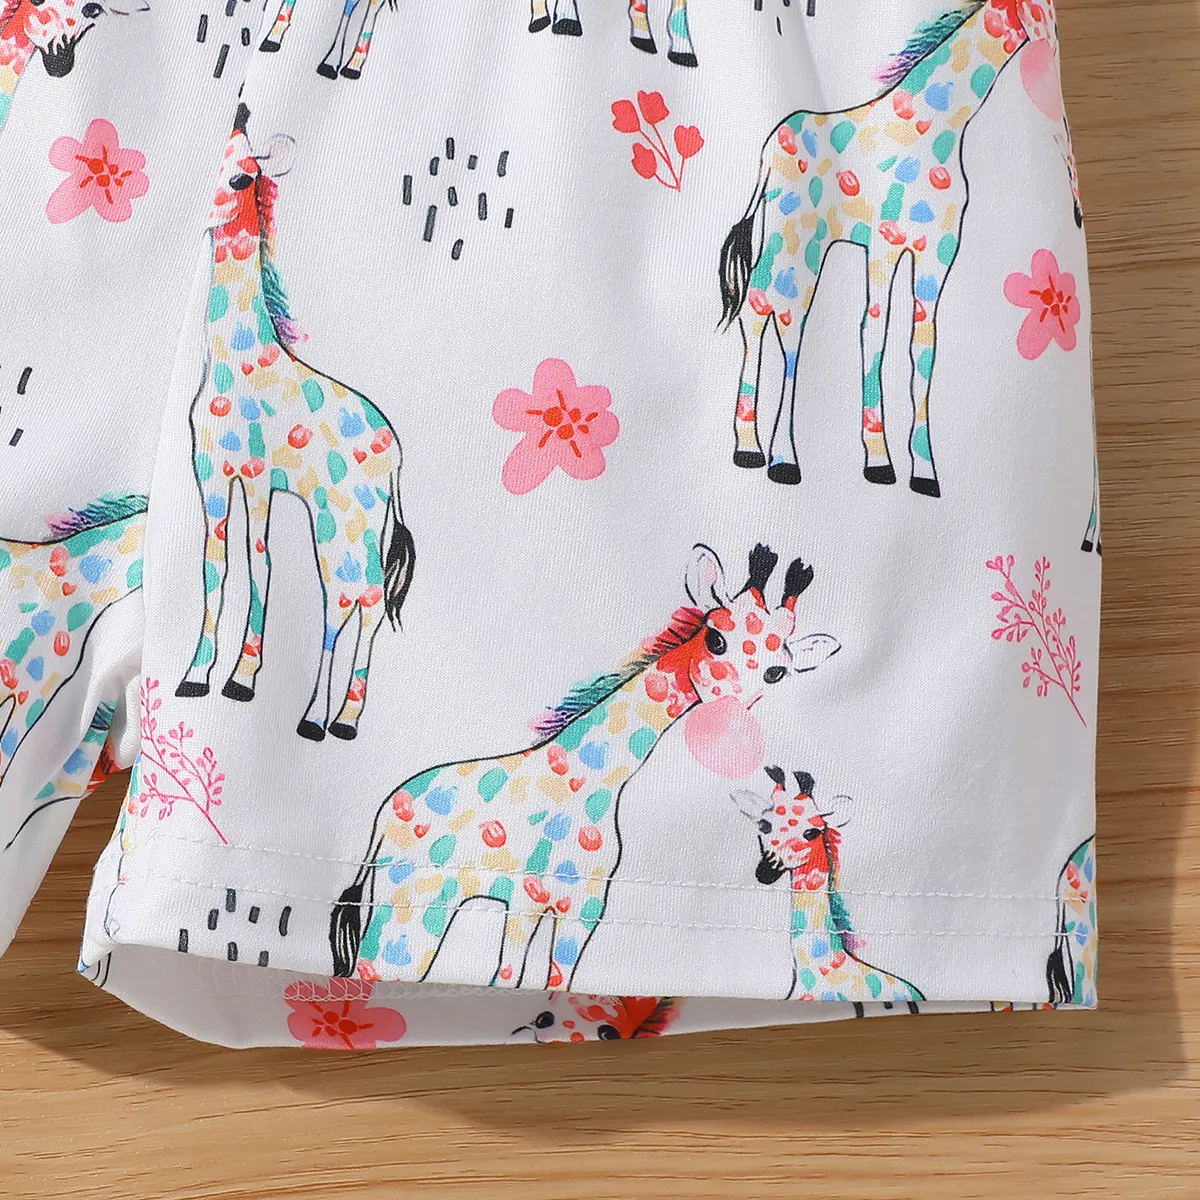 2 Stück Kleinkinder Mädchen Flatterärmel Kindlich Giraffe T-Shirt-Sets rosa big image 1